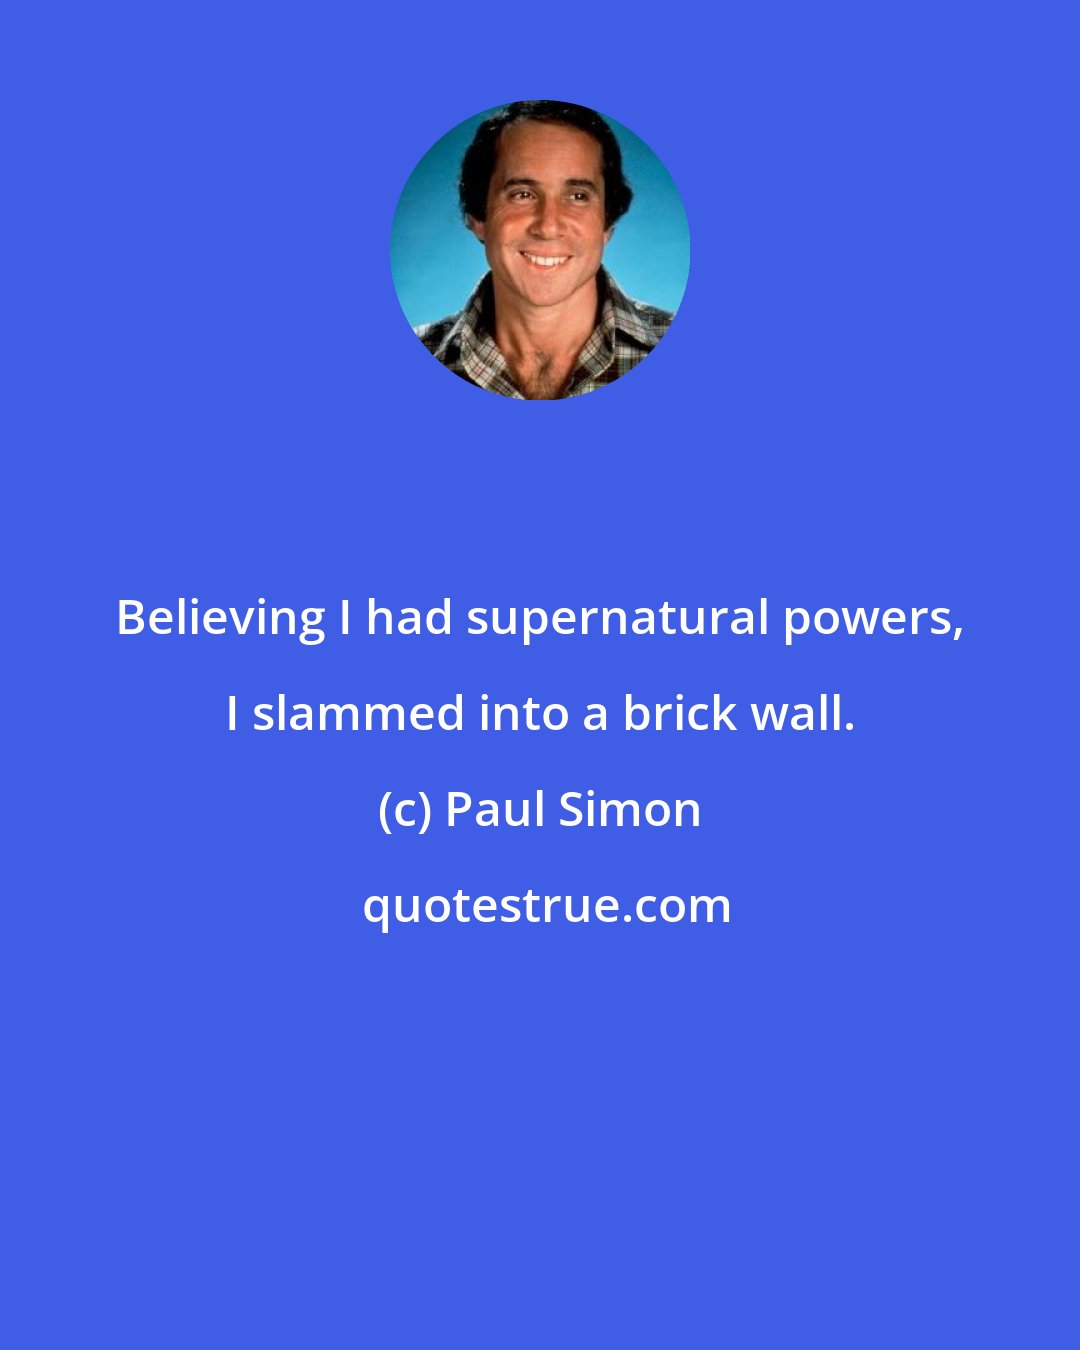 Paul Simon: Believing I had supernatural powers, I slammed into a brick wall.